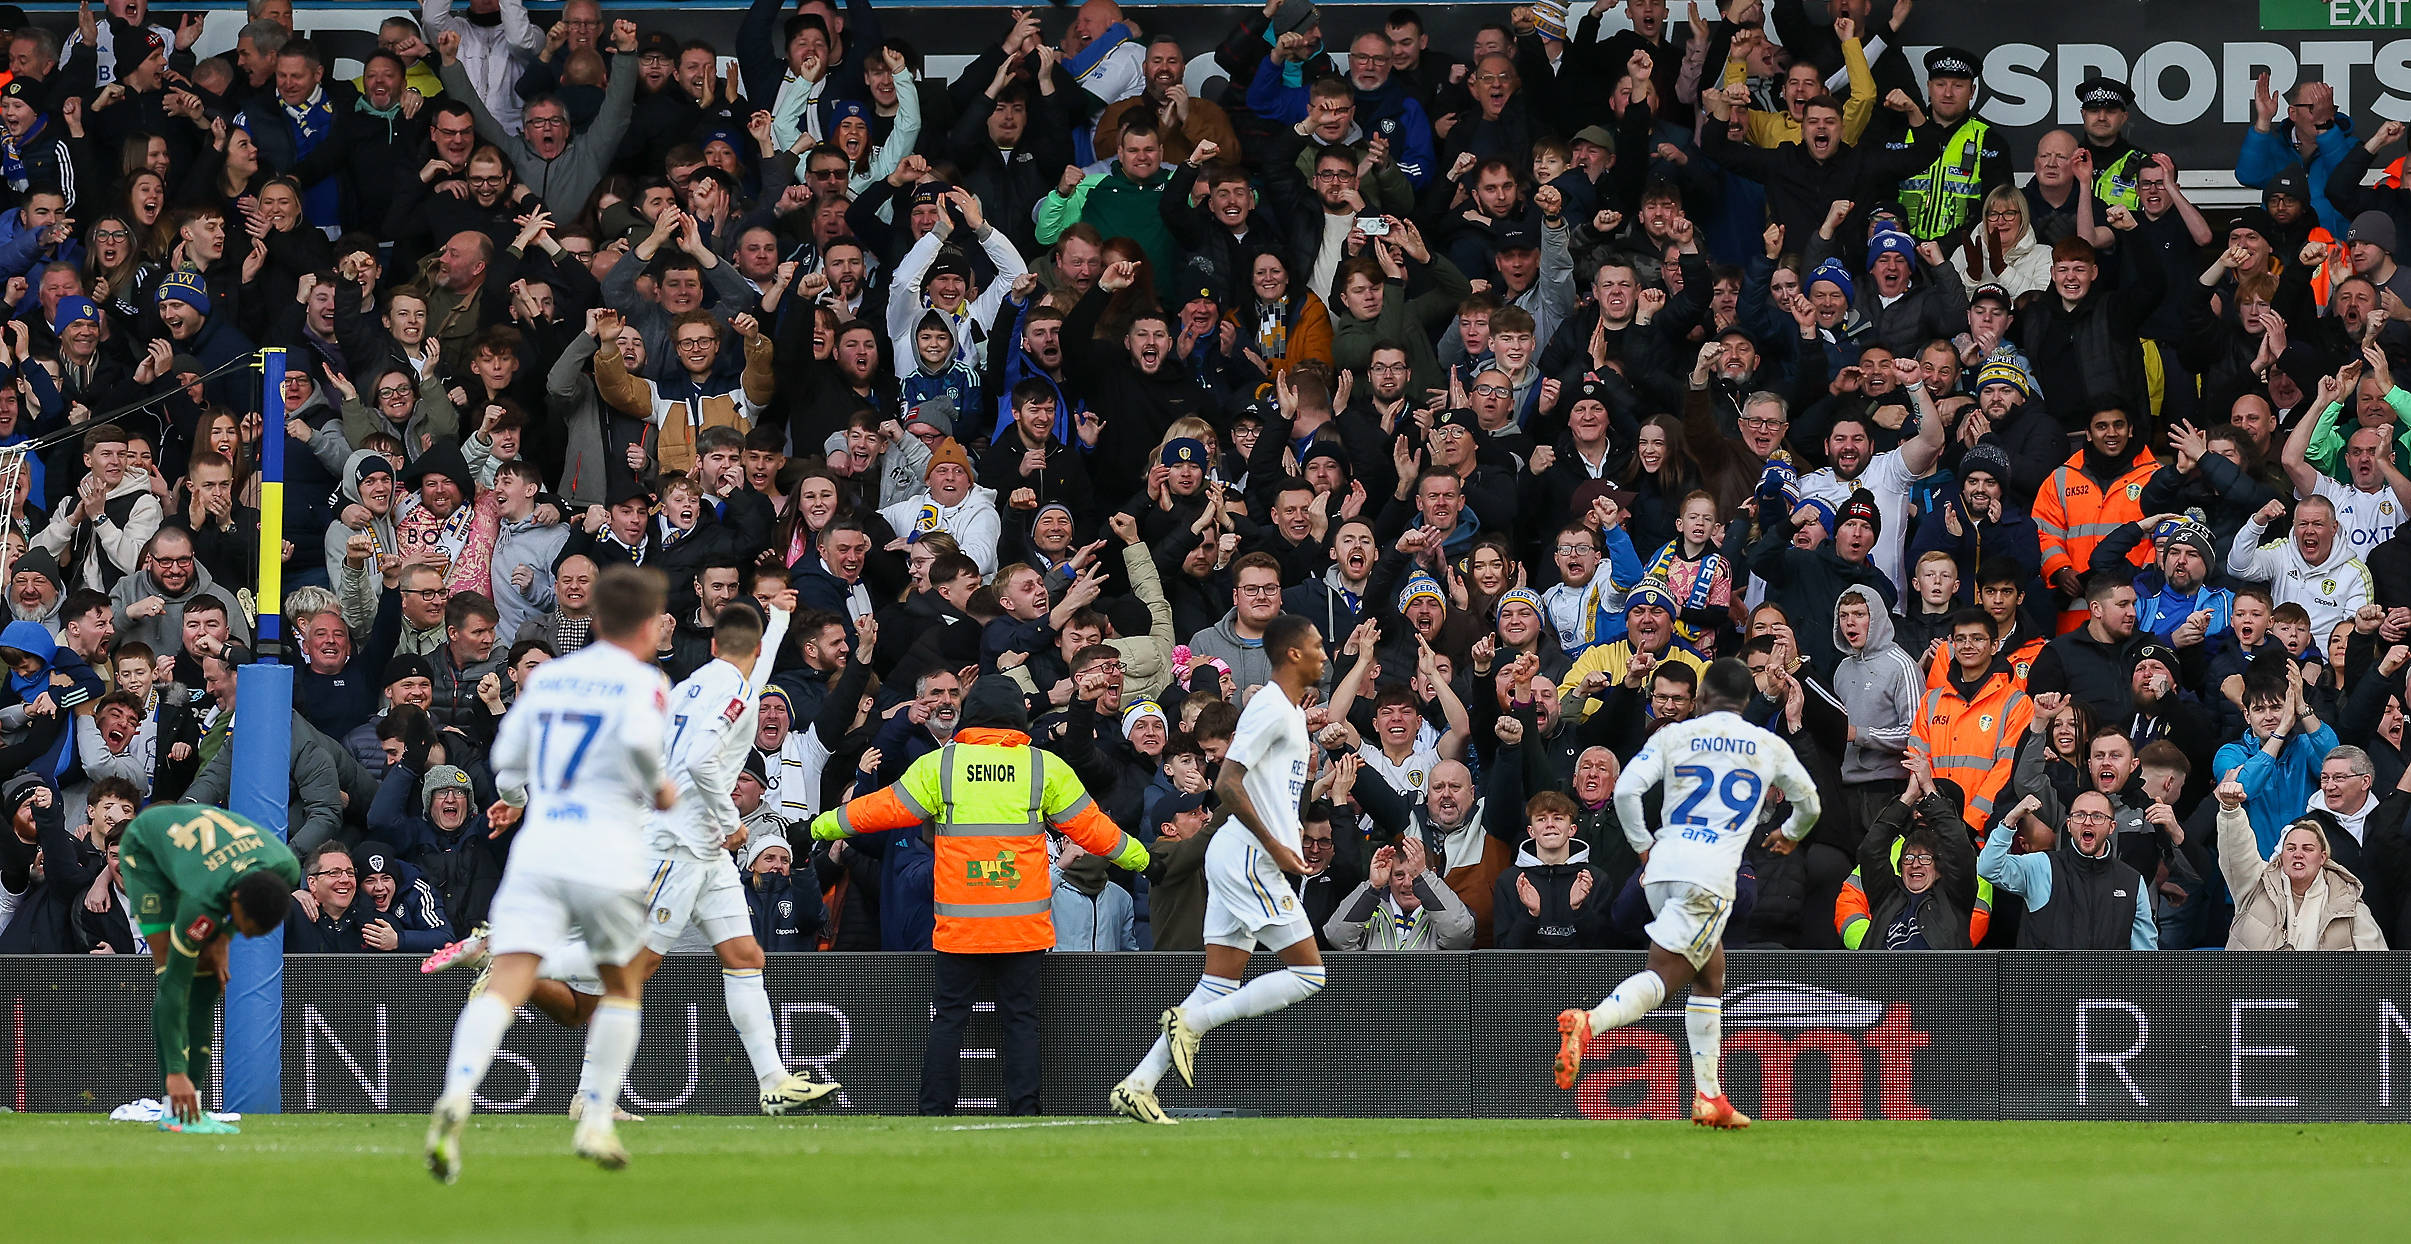 Leeds United players celebrate goal